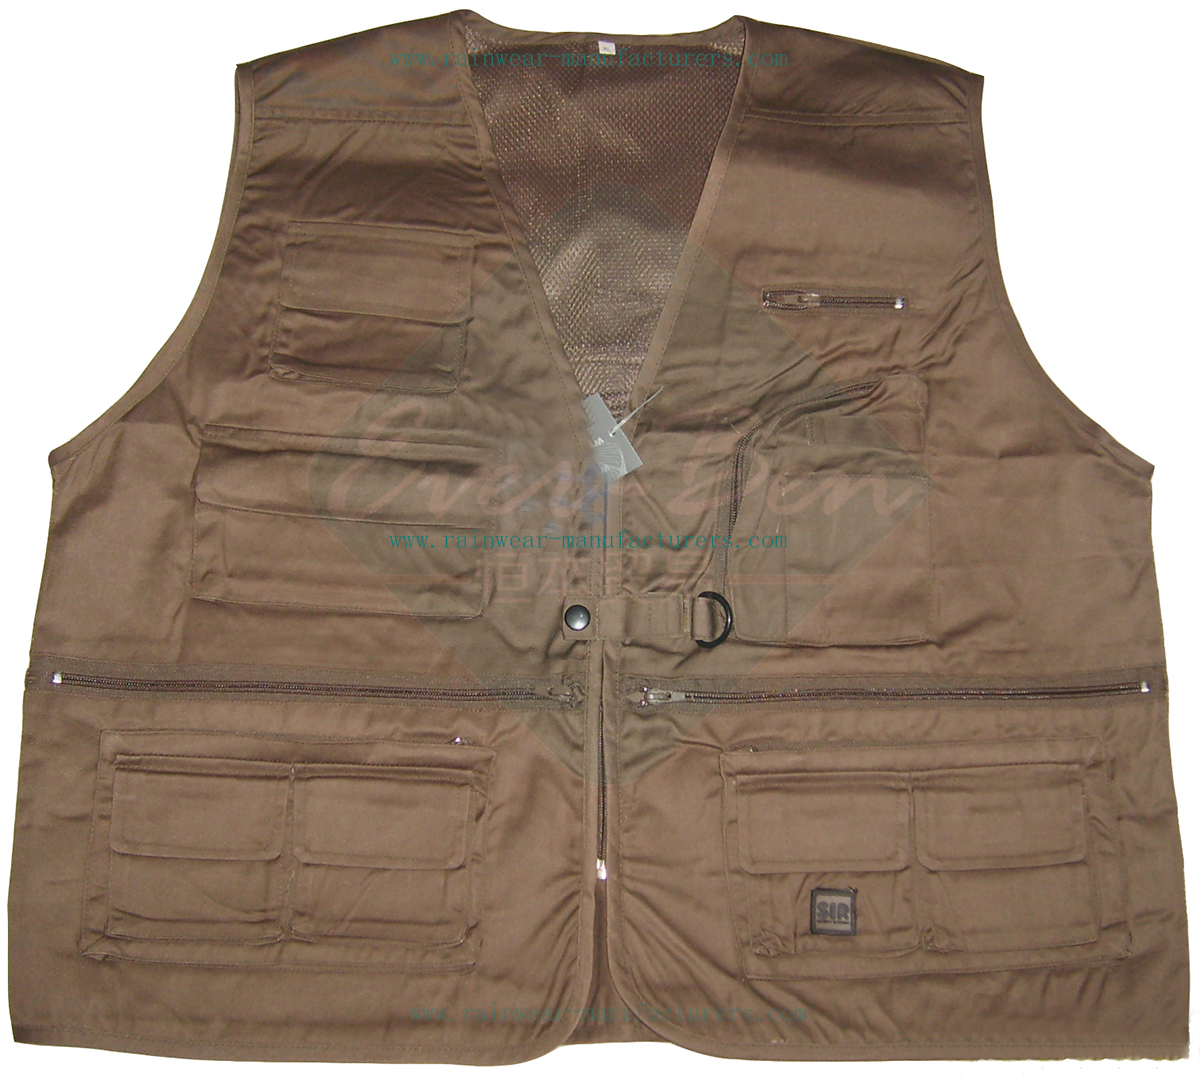 surveyor work vest with pockets